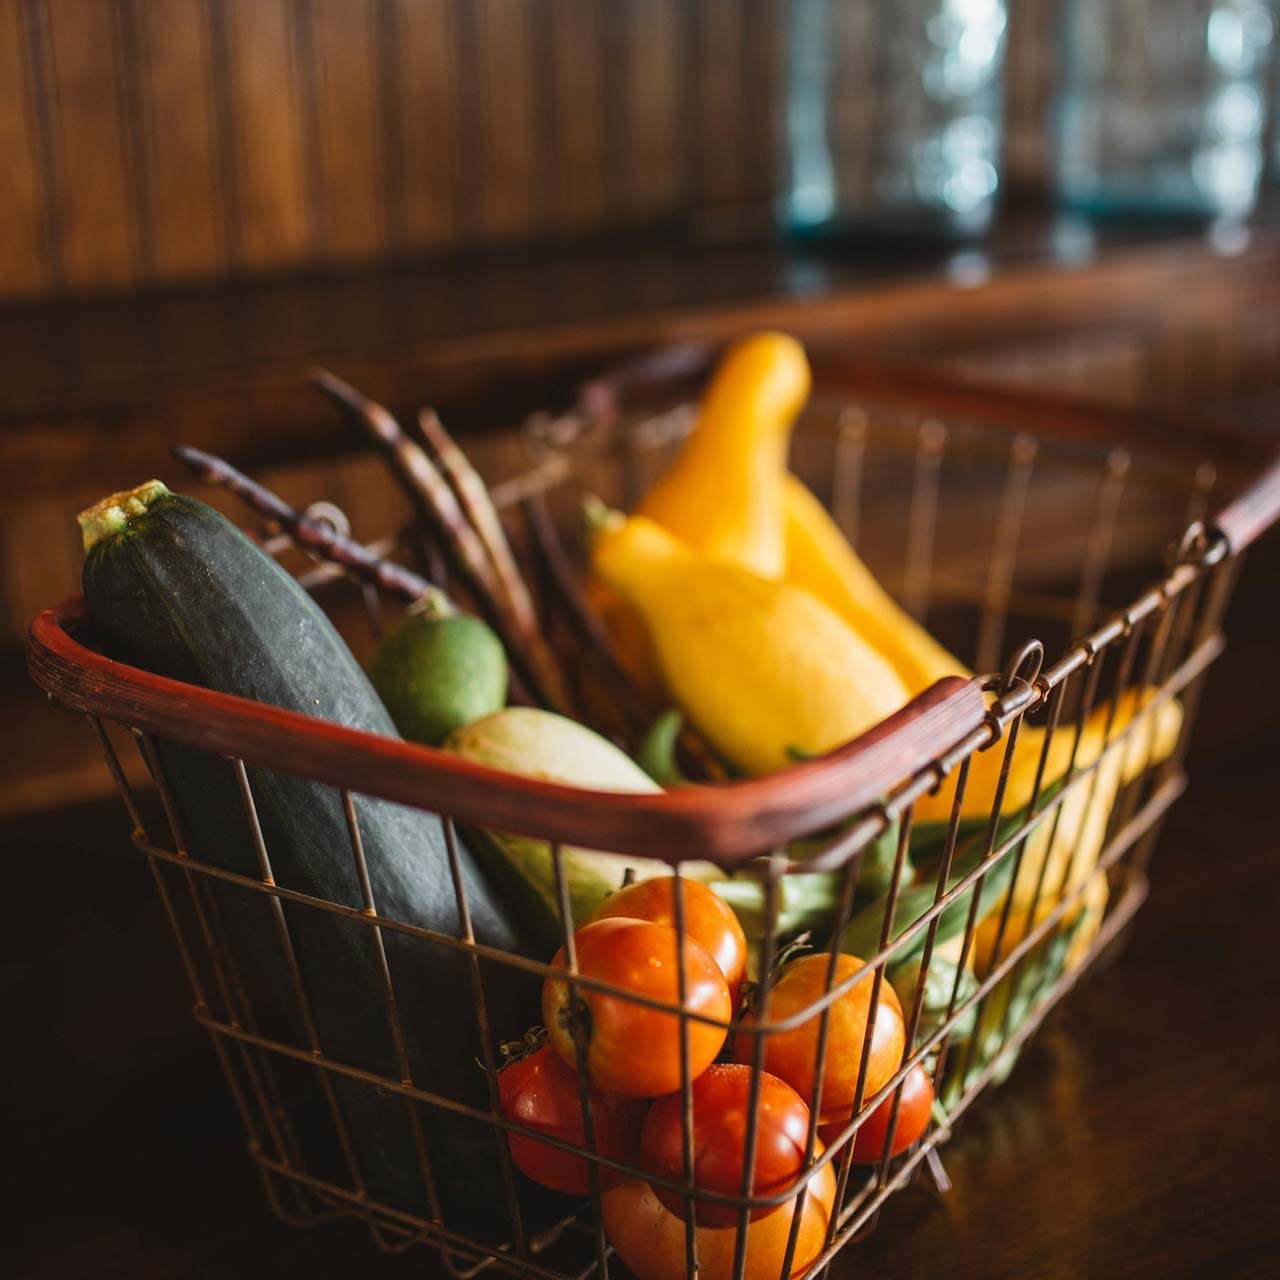 Yellow,Food,Storage basket,Candy corn,Basket,Fruit,Plant,Produce,Bowl,Dish